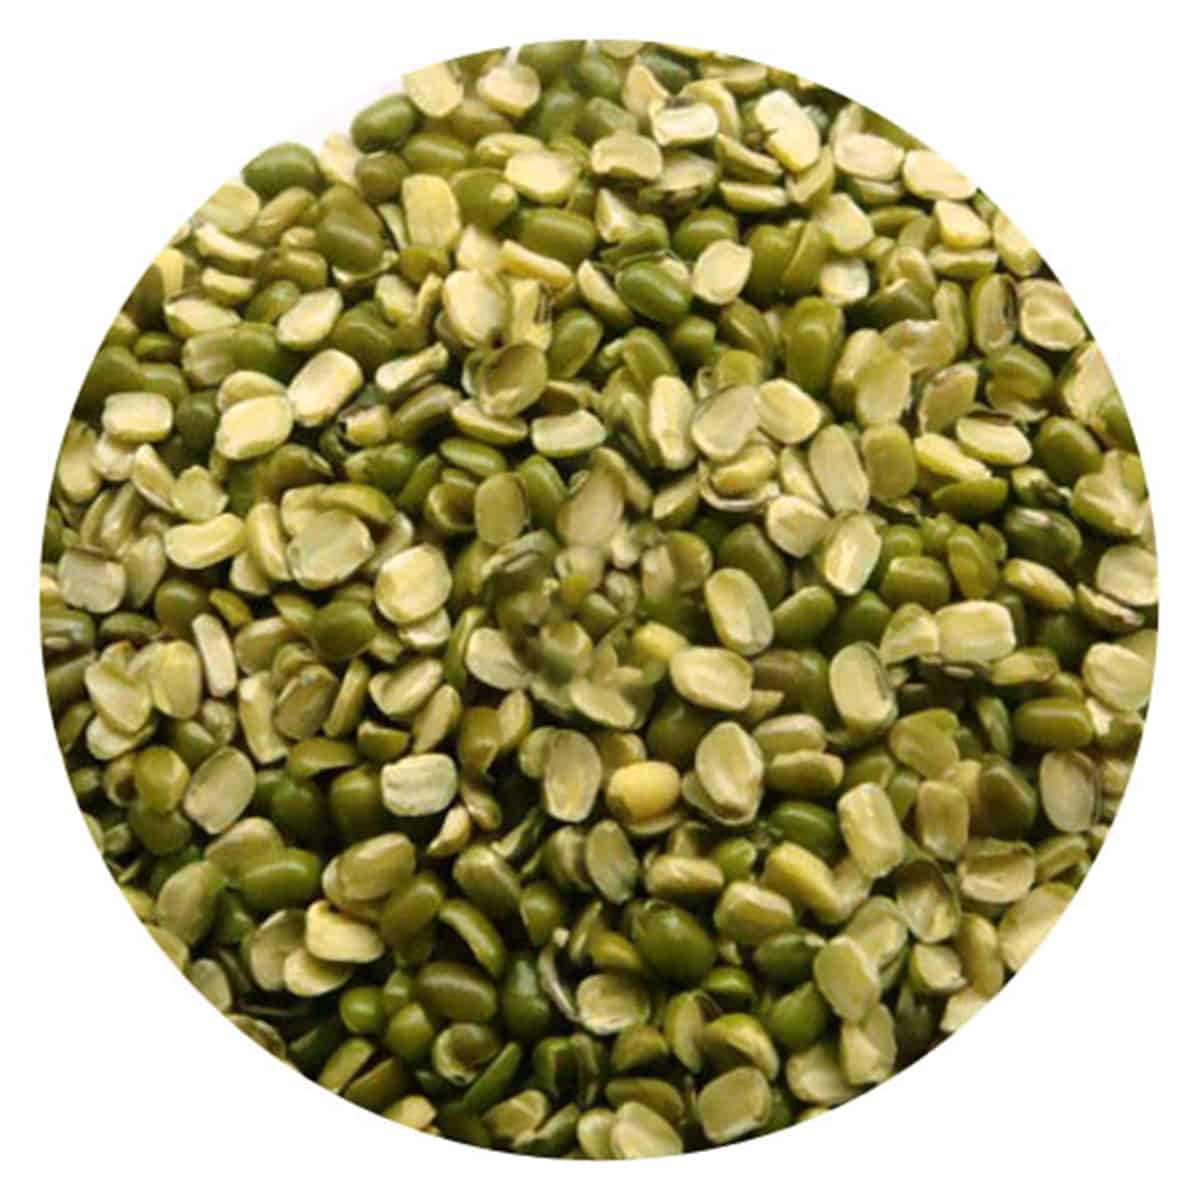 Buy IAG Foods Moong Dal Chilka (Split Green Gram with Skin) - 1 kg